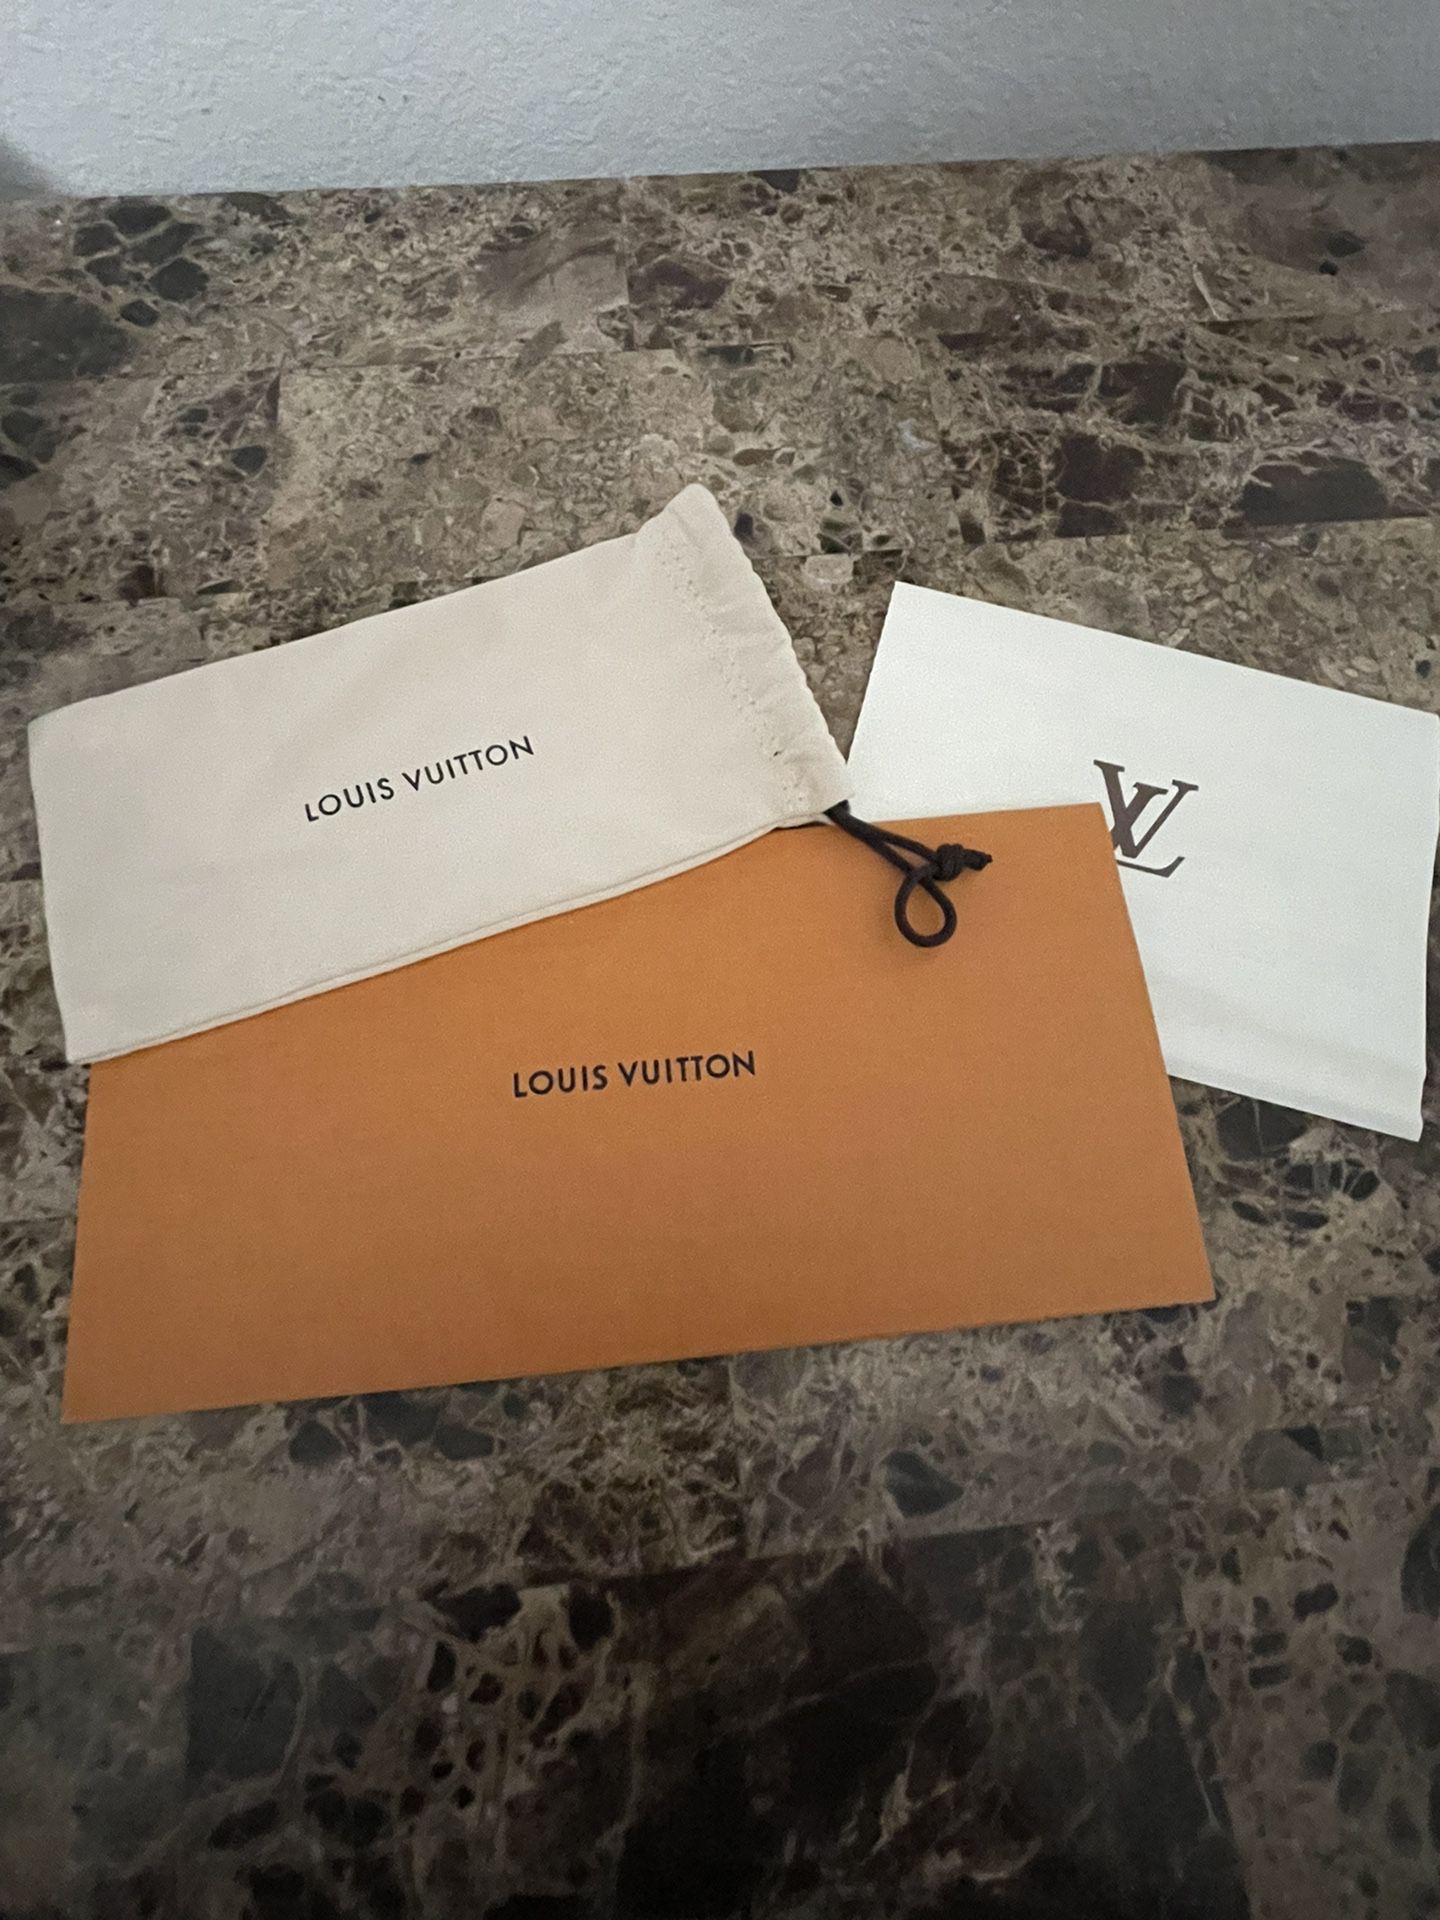 Louis Vuitton Men's Evidence Sunglasses for Sale in Ruskin, FL